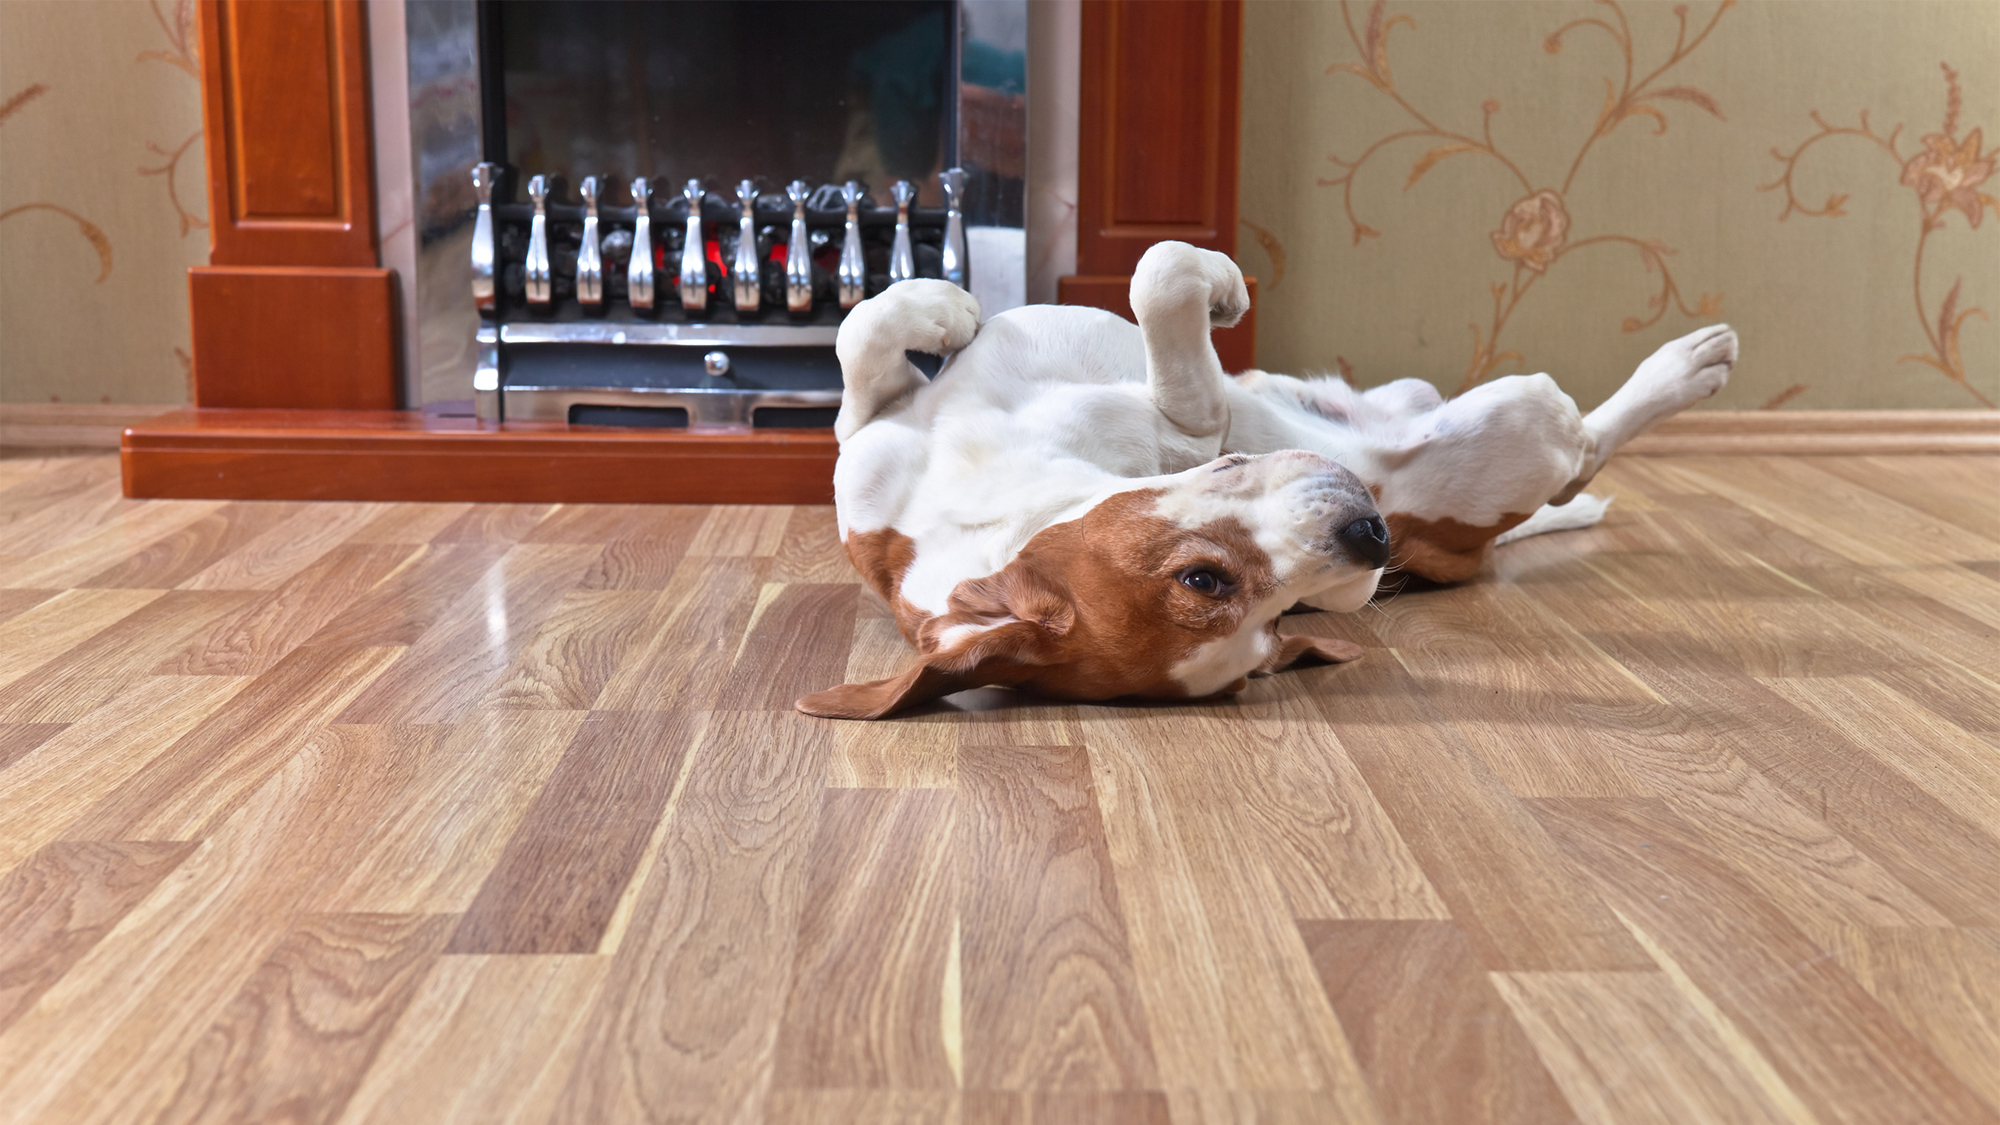 Pet dog rolling on hardwood floor.